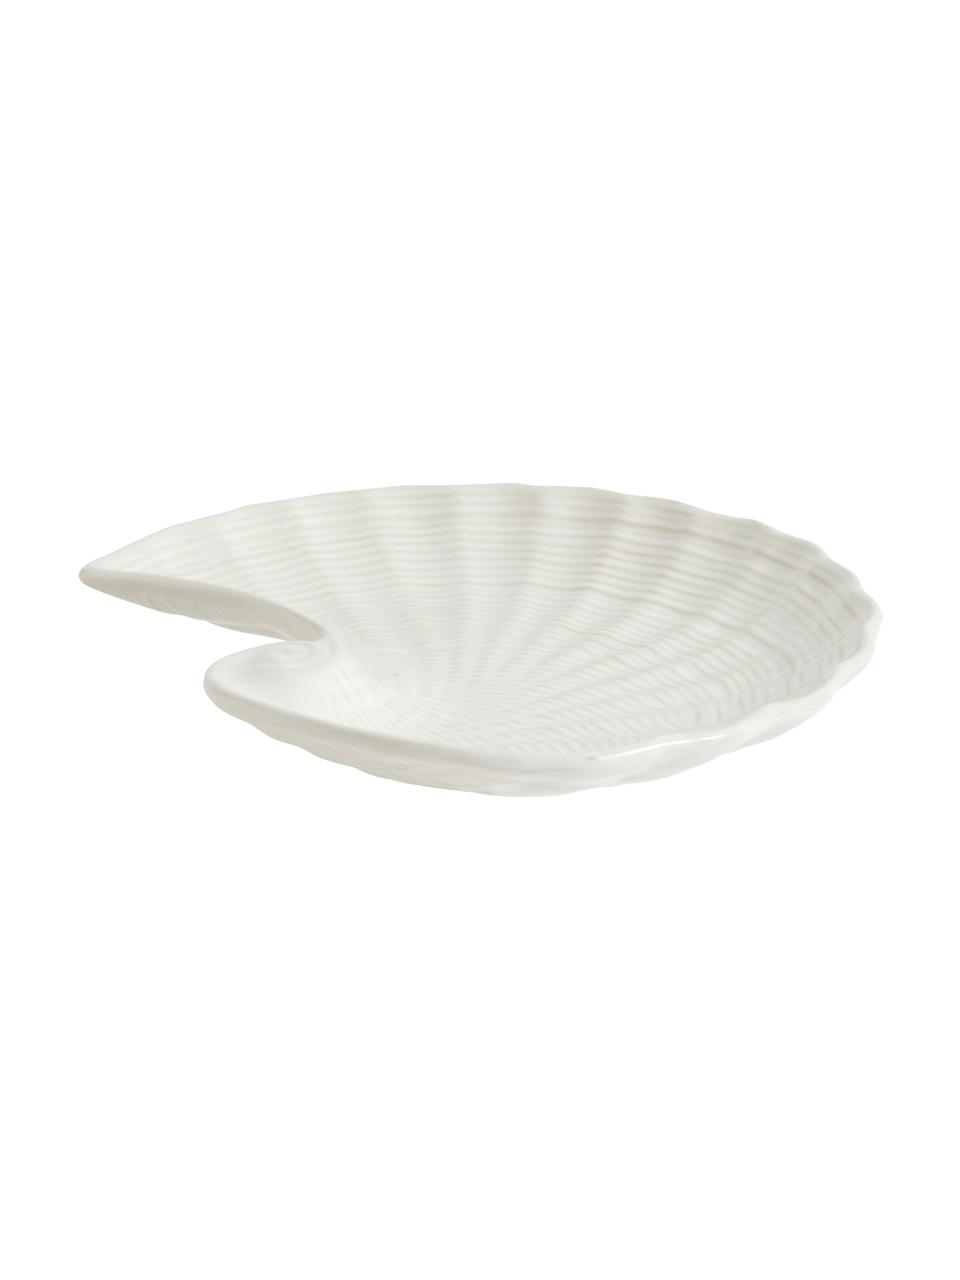 Dekorativní miska Gullfoss, Keramika, Bílá, Š 18 cm, V 2 cm